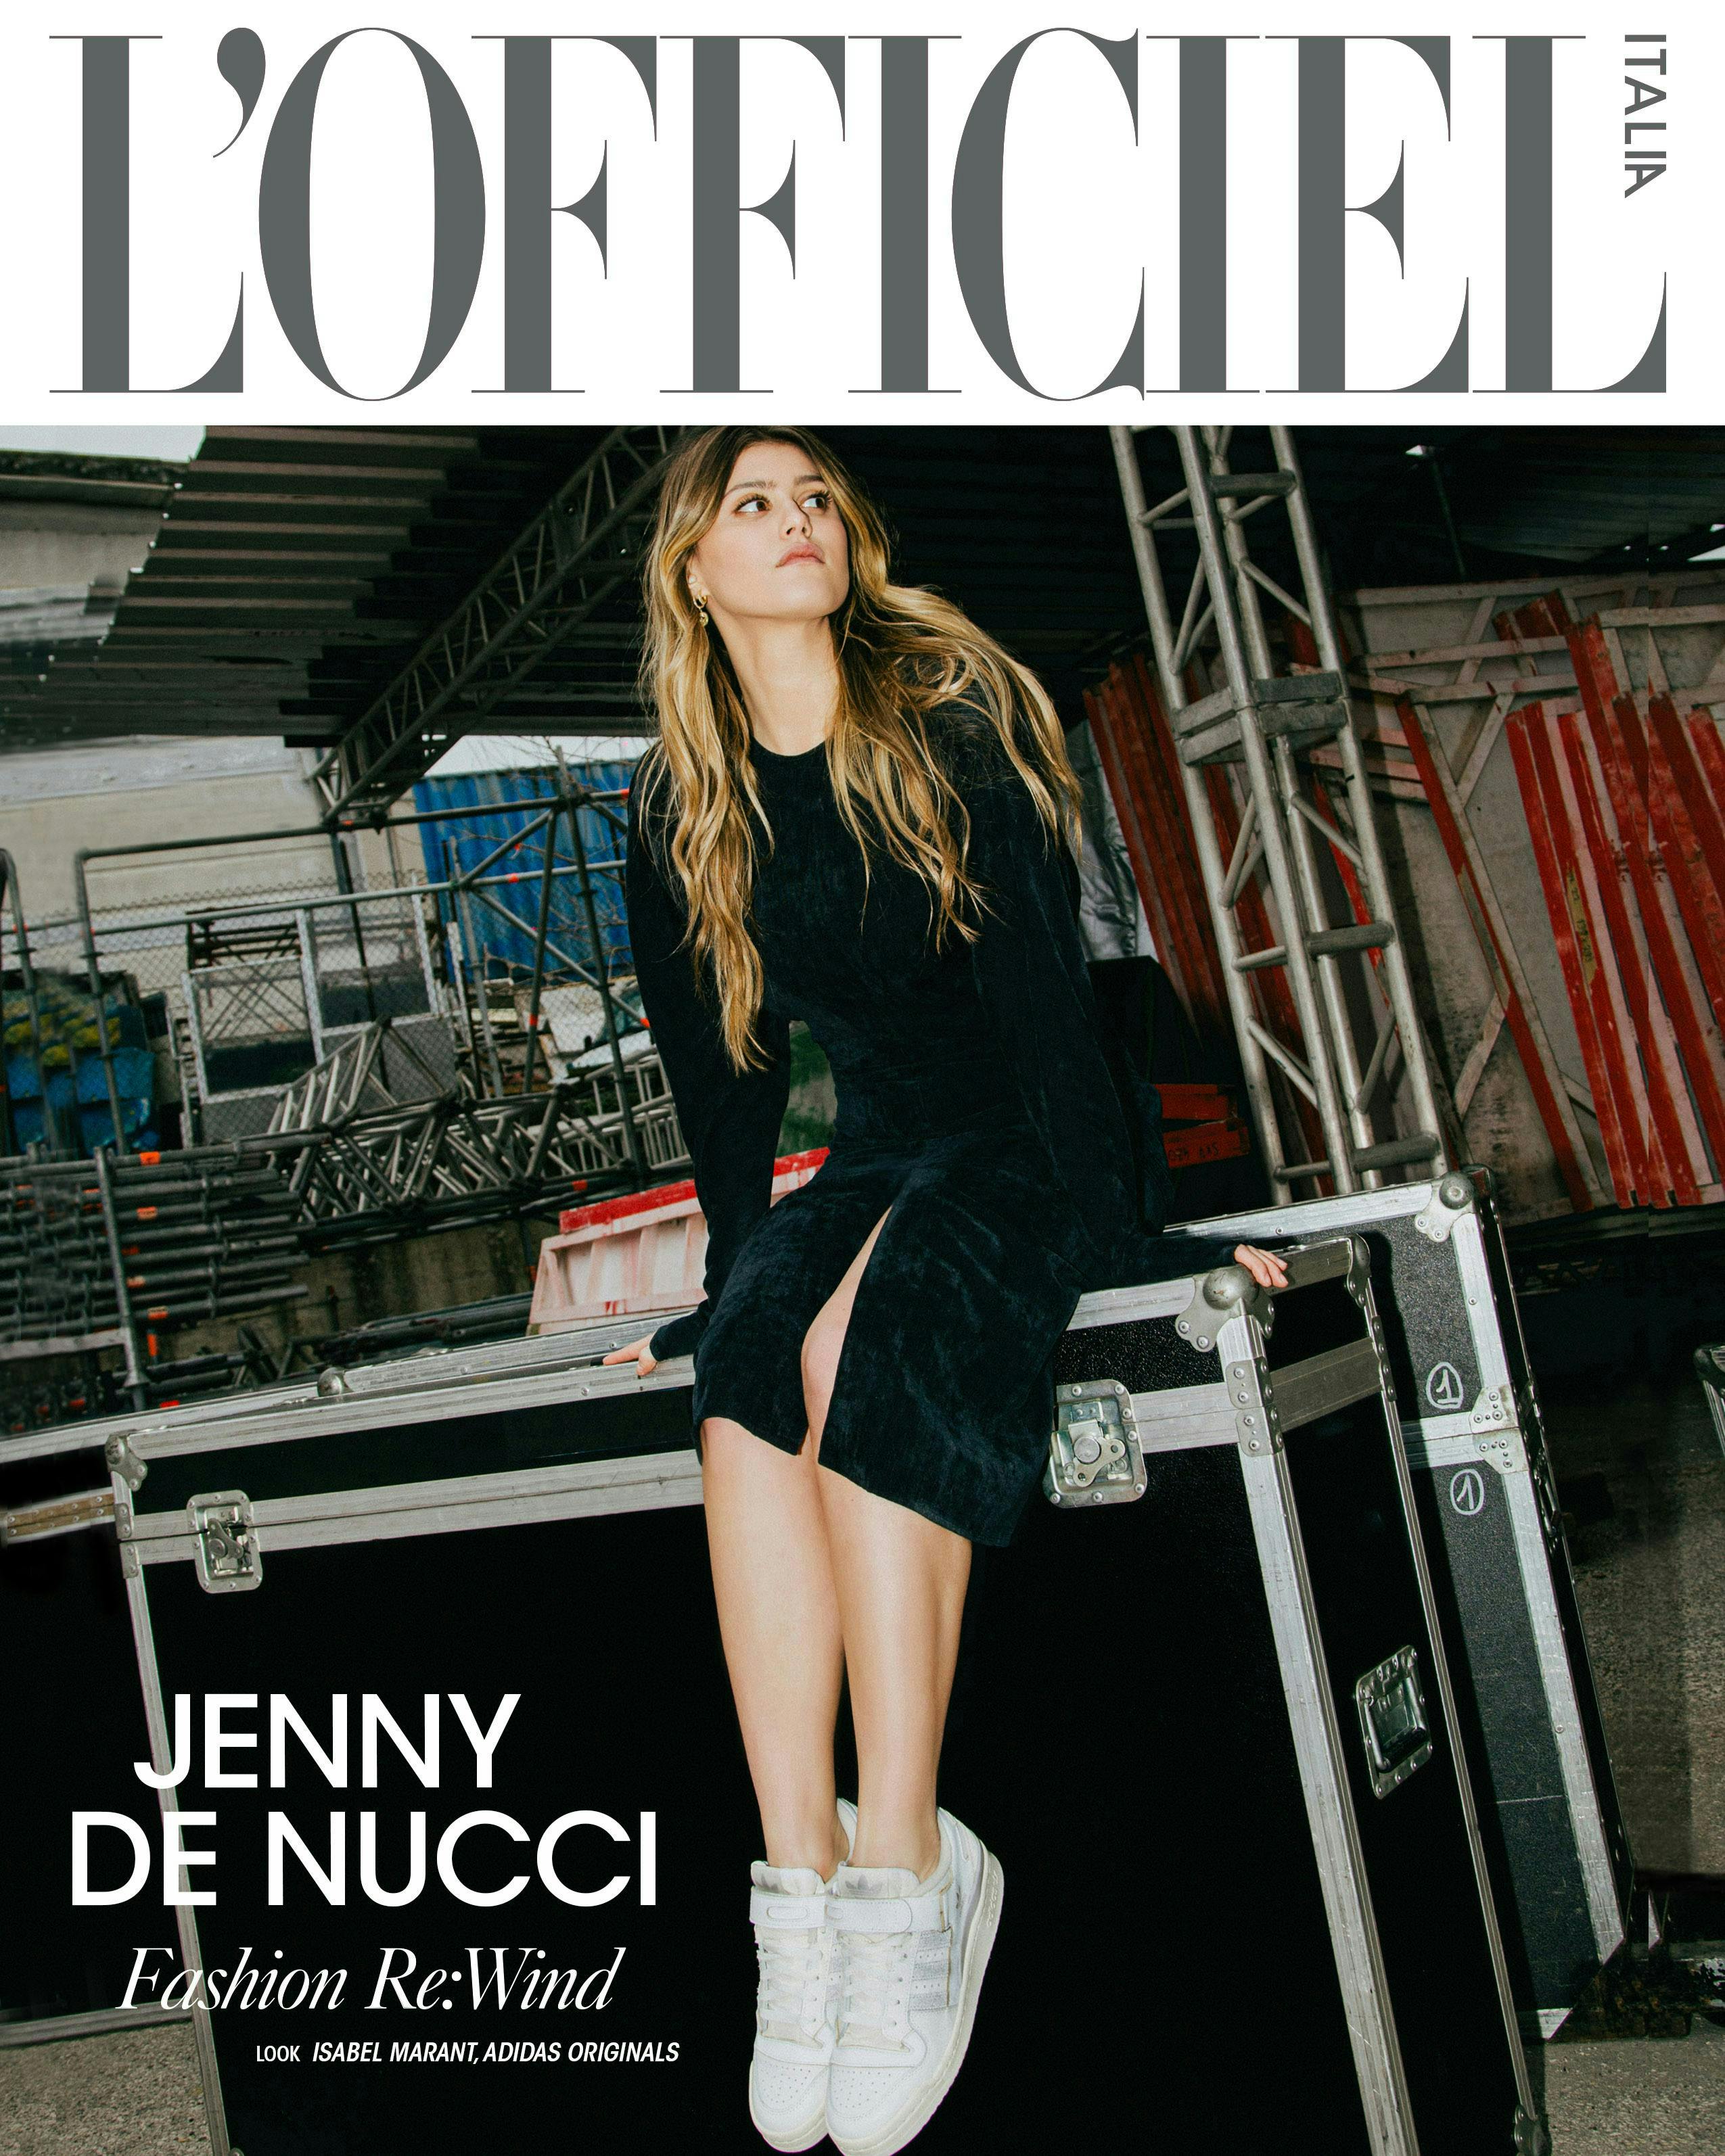 Jenny de Nucci intervista editoriale - L'Officiel Italia 